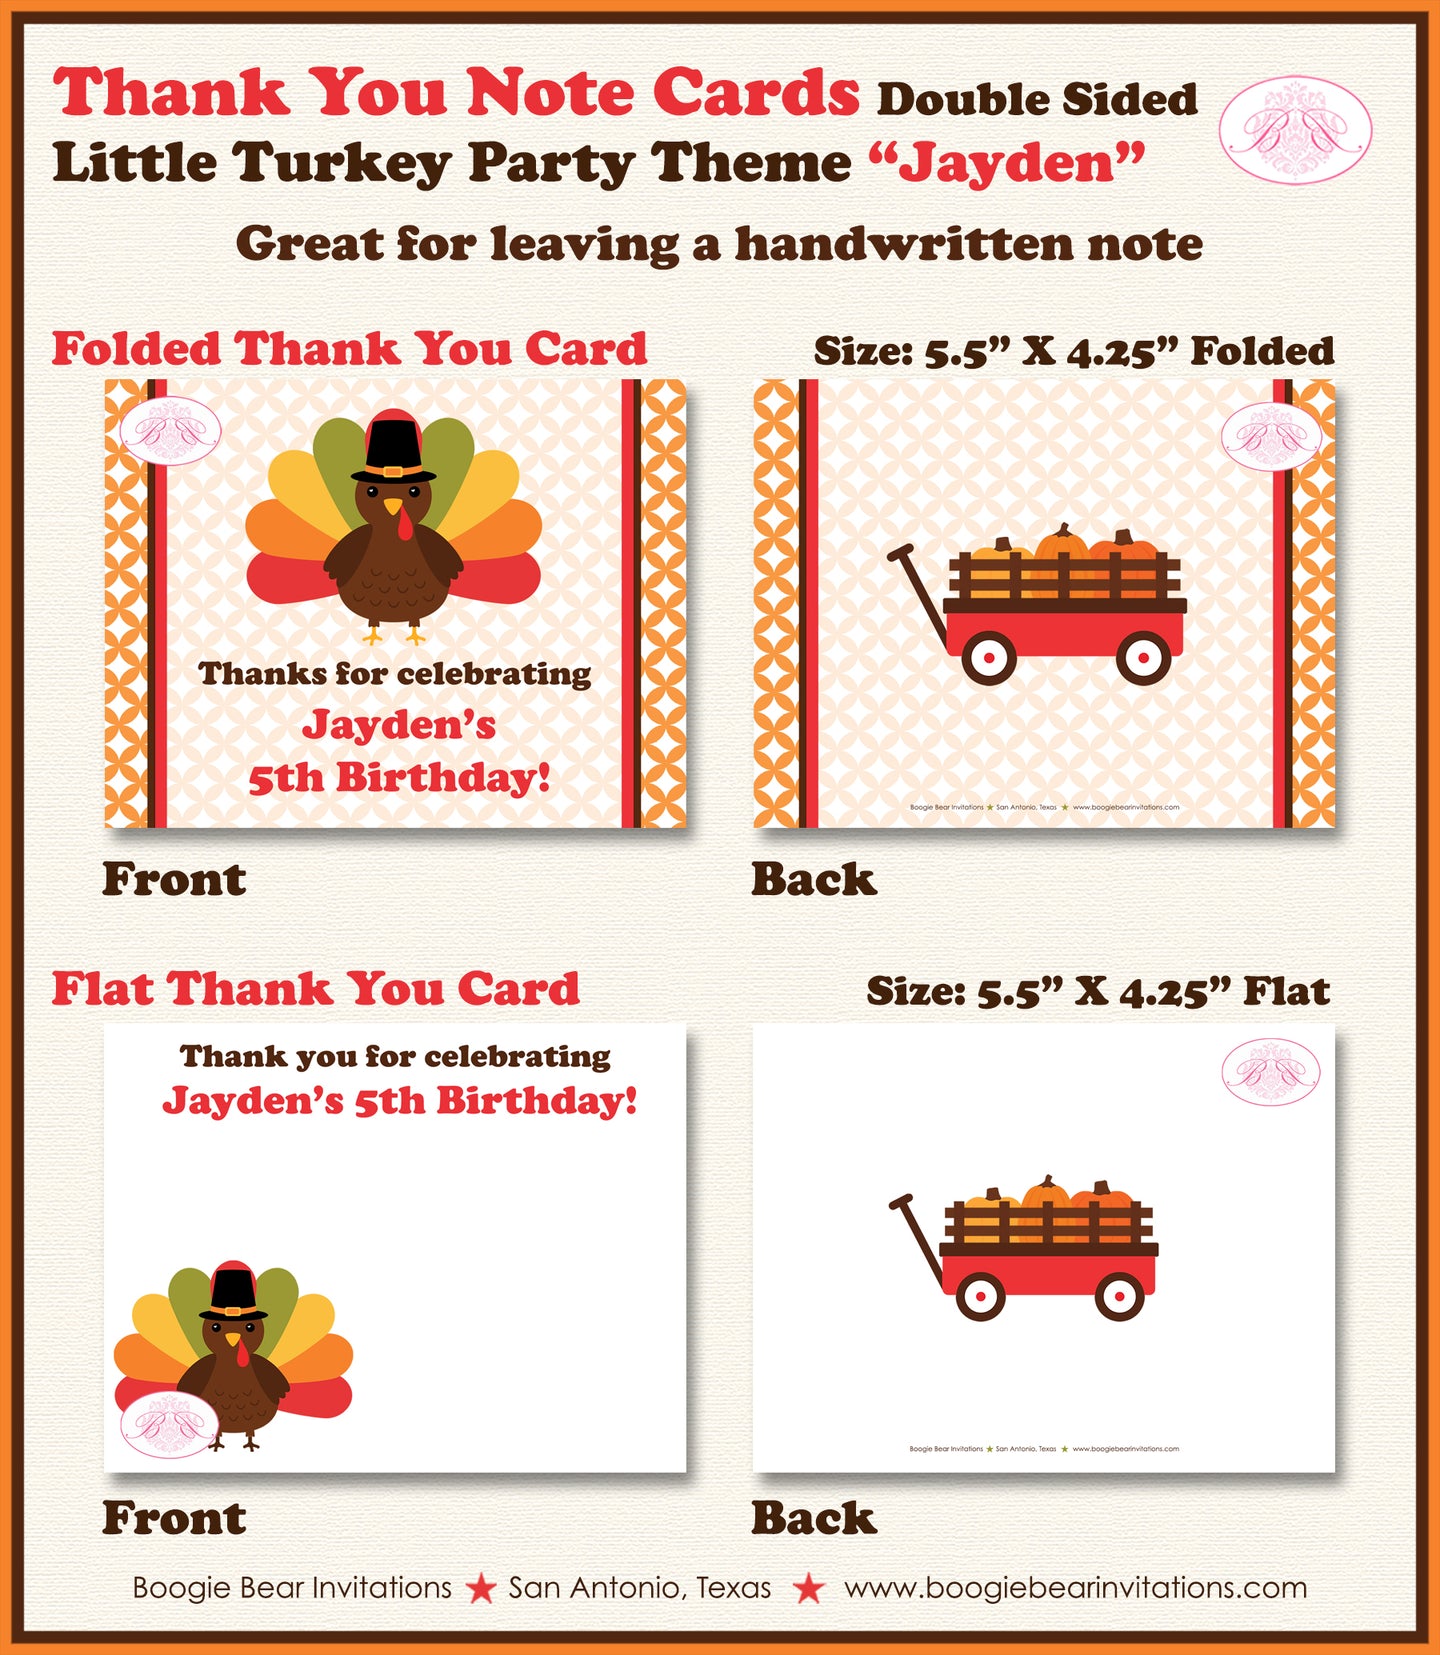 Little Turkey Party Thank You Card Birthday Girl Boy Thanksgiving Boogie Bear Invitations Jayden Theme Printed